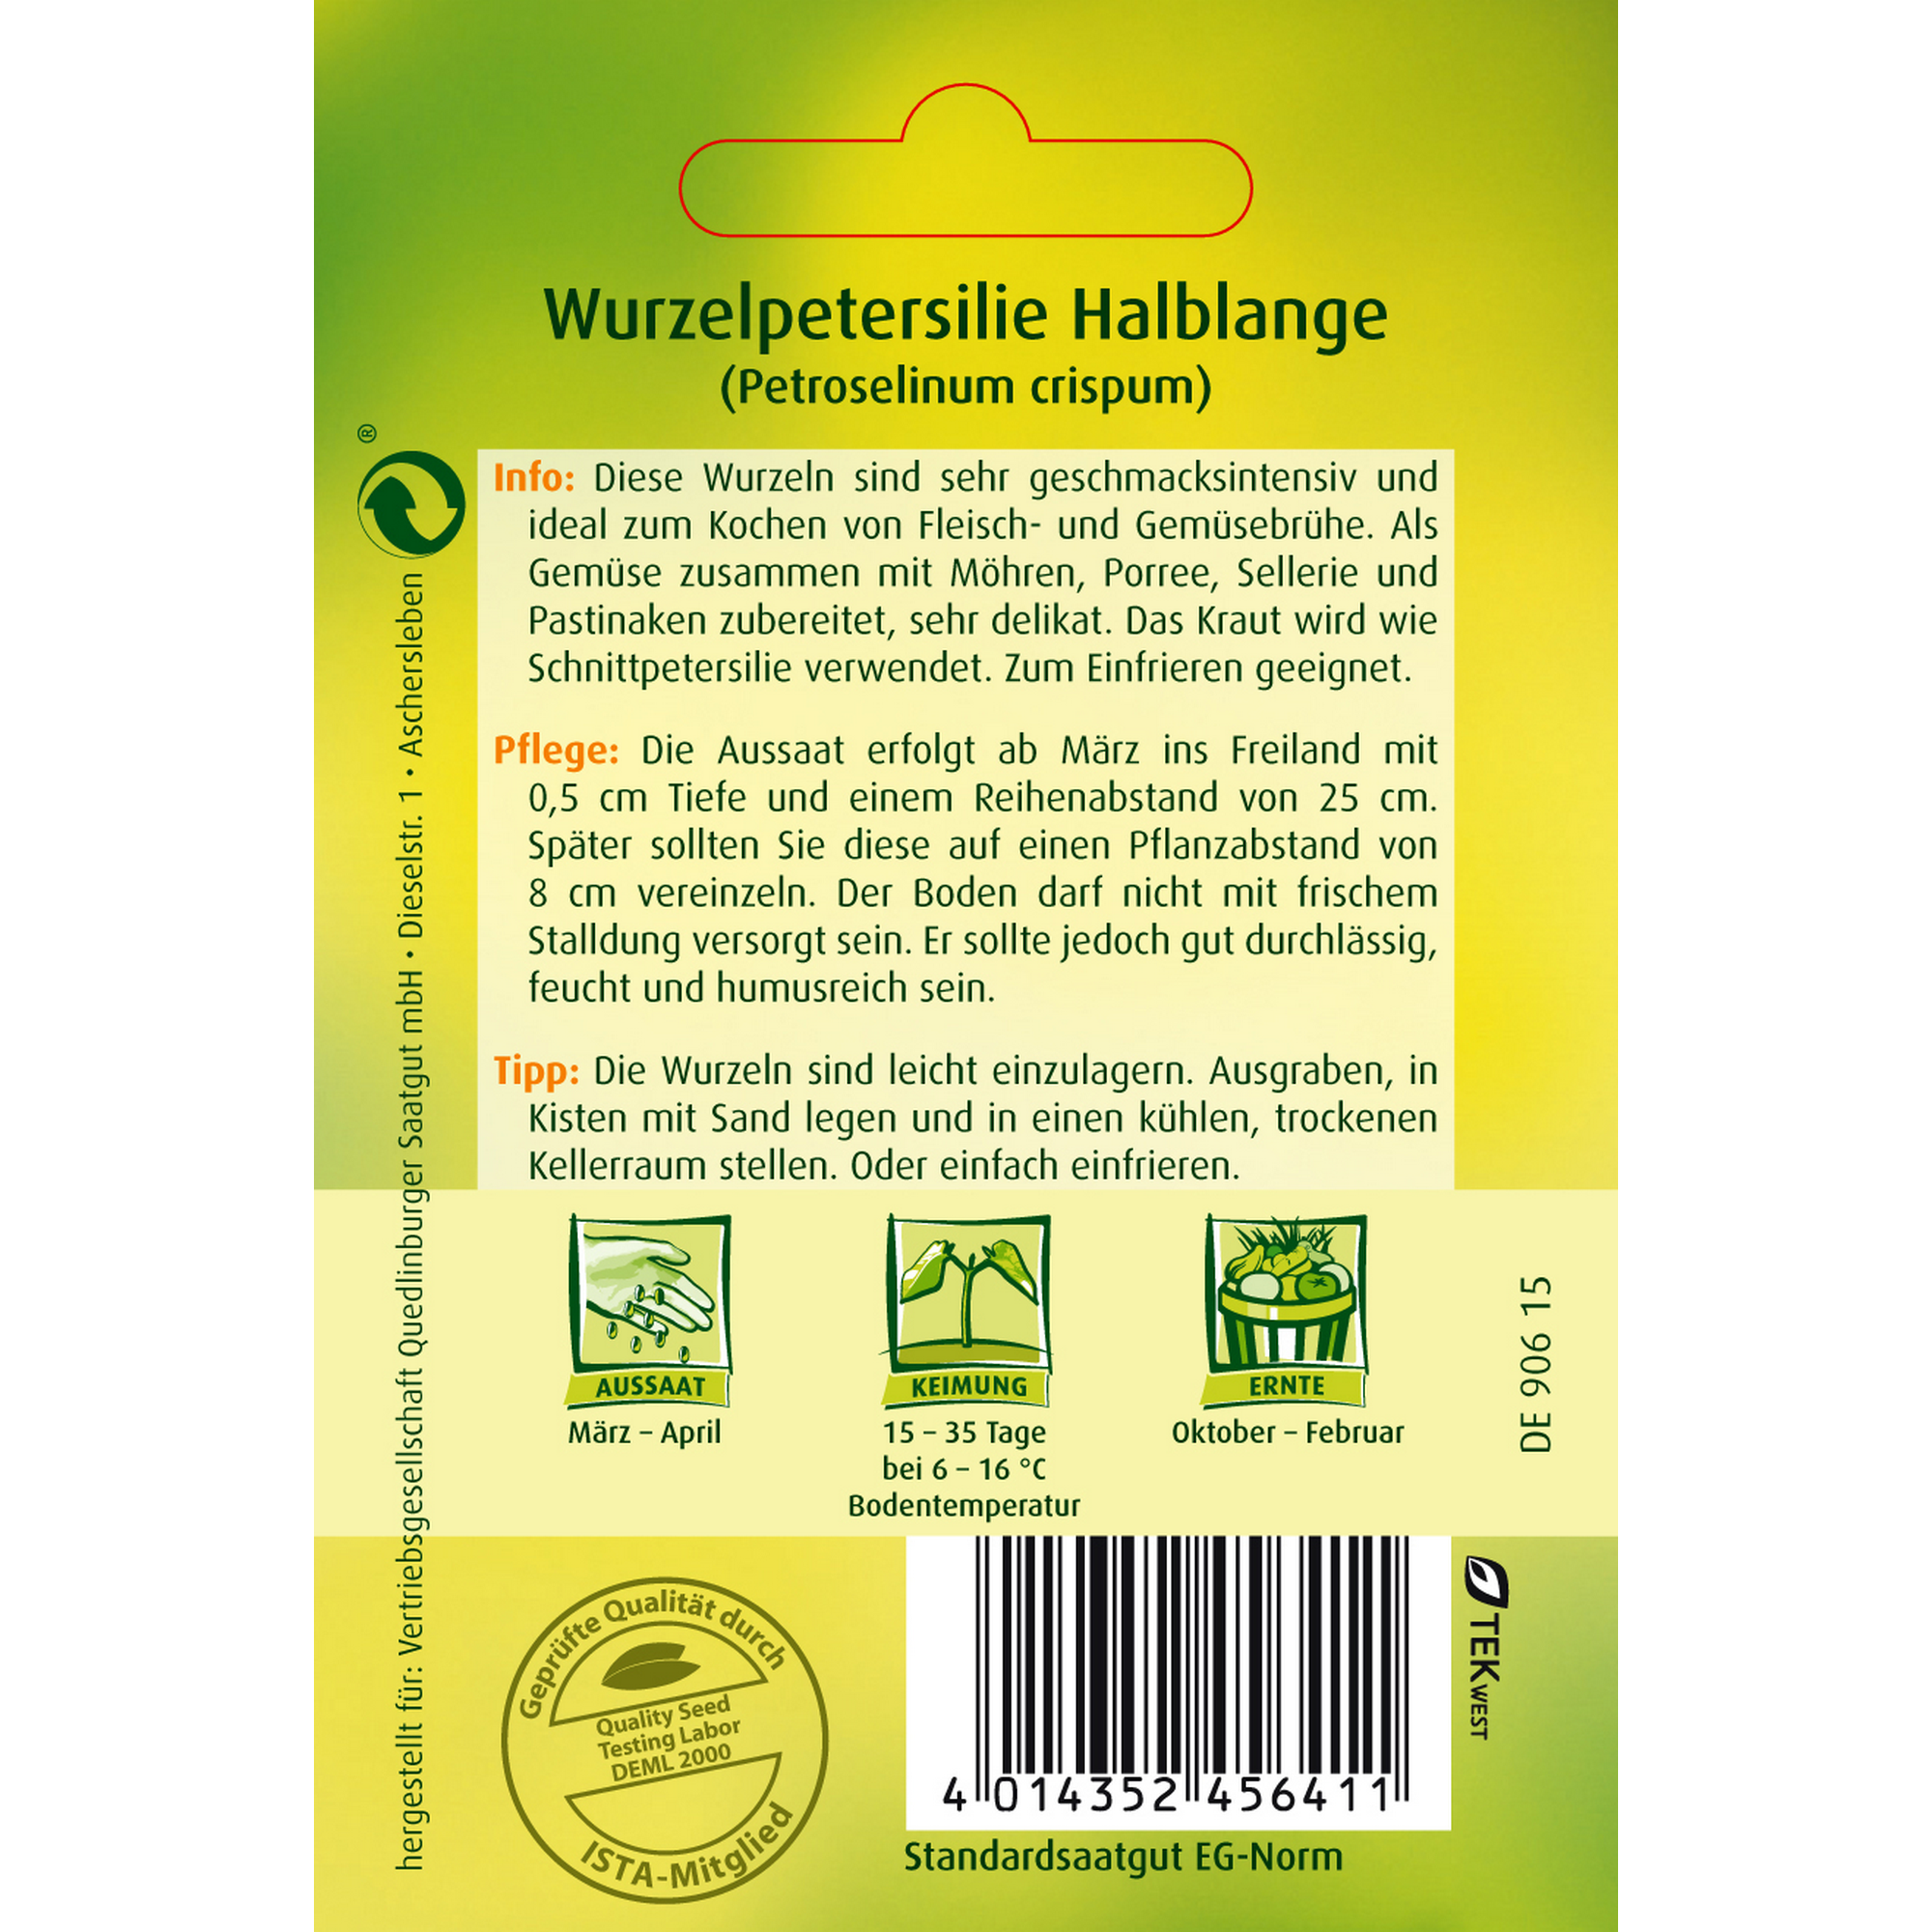 Wurzelpetersilie 'Halblange' + product picture